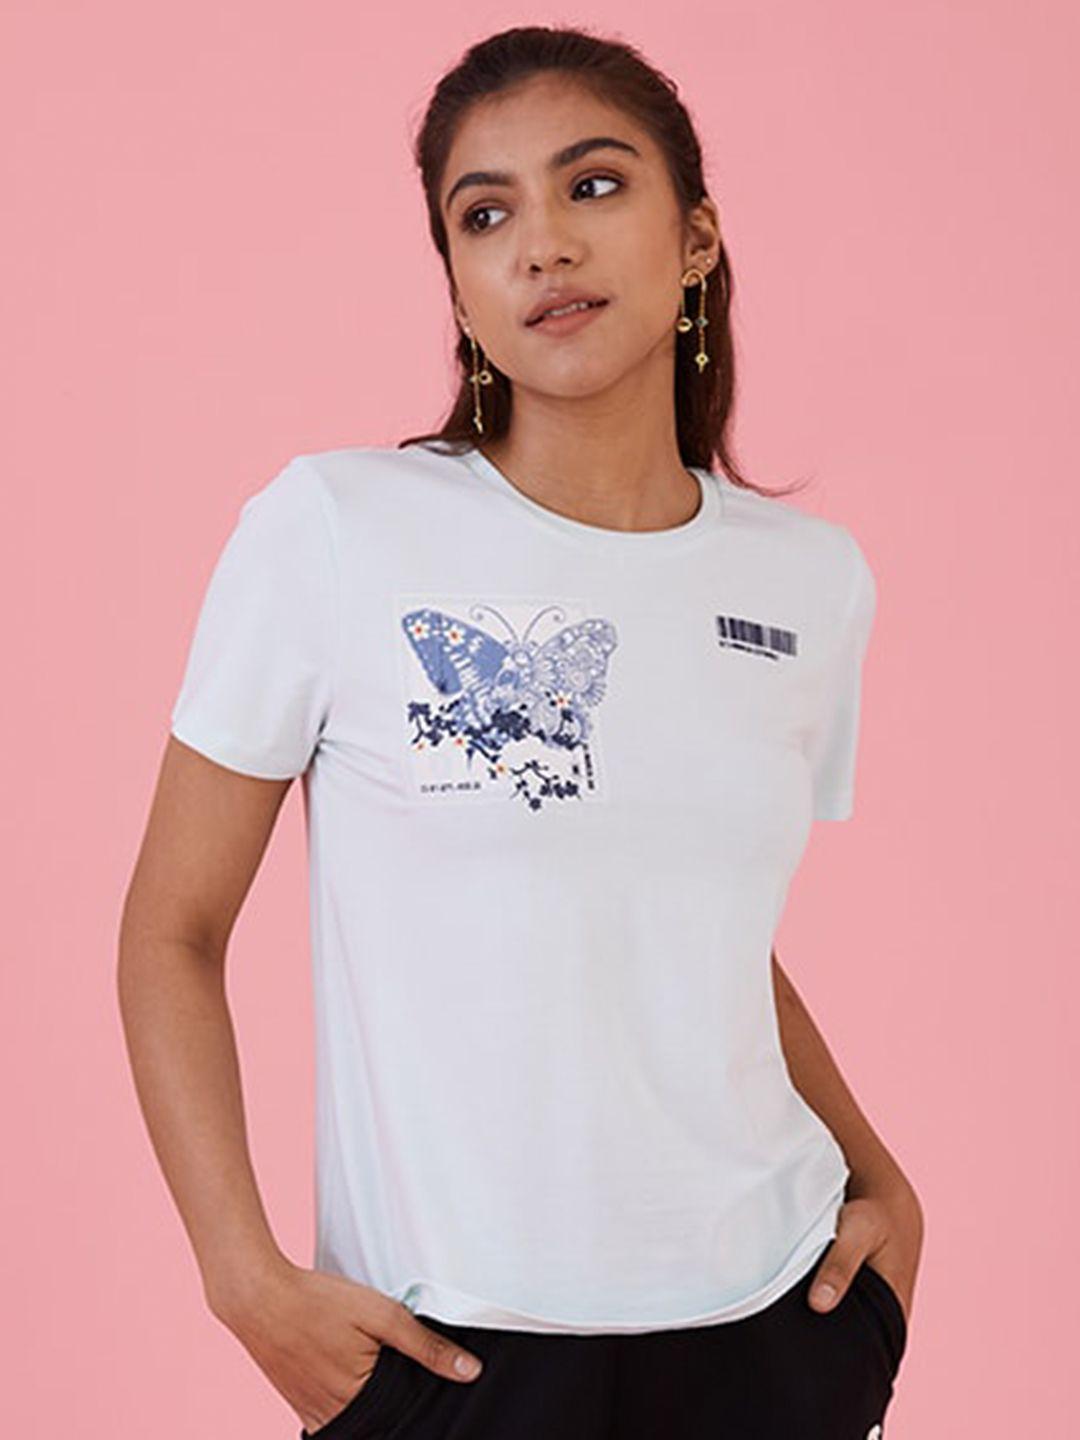 muvazo low-key conversational printed t-shirt